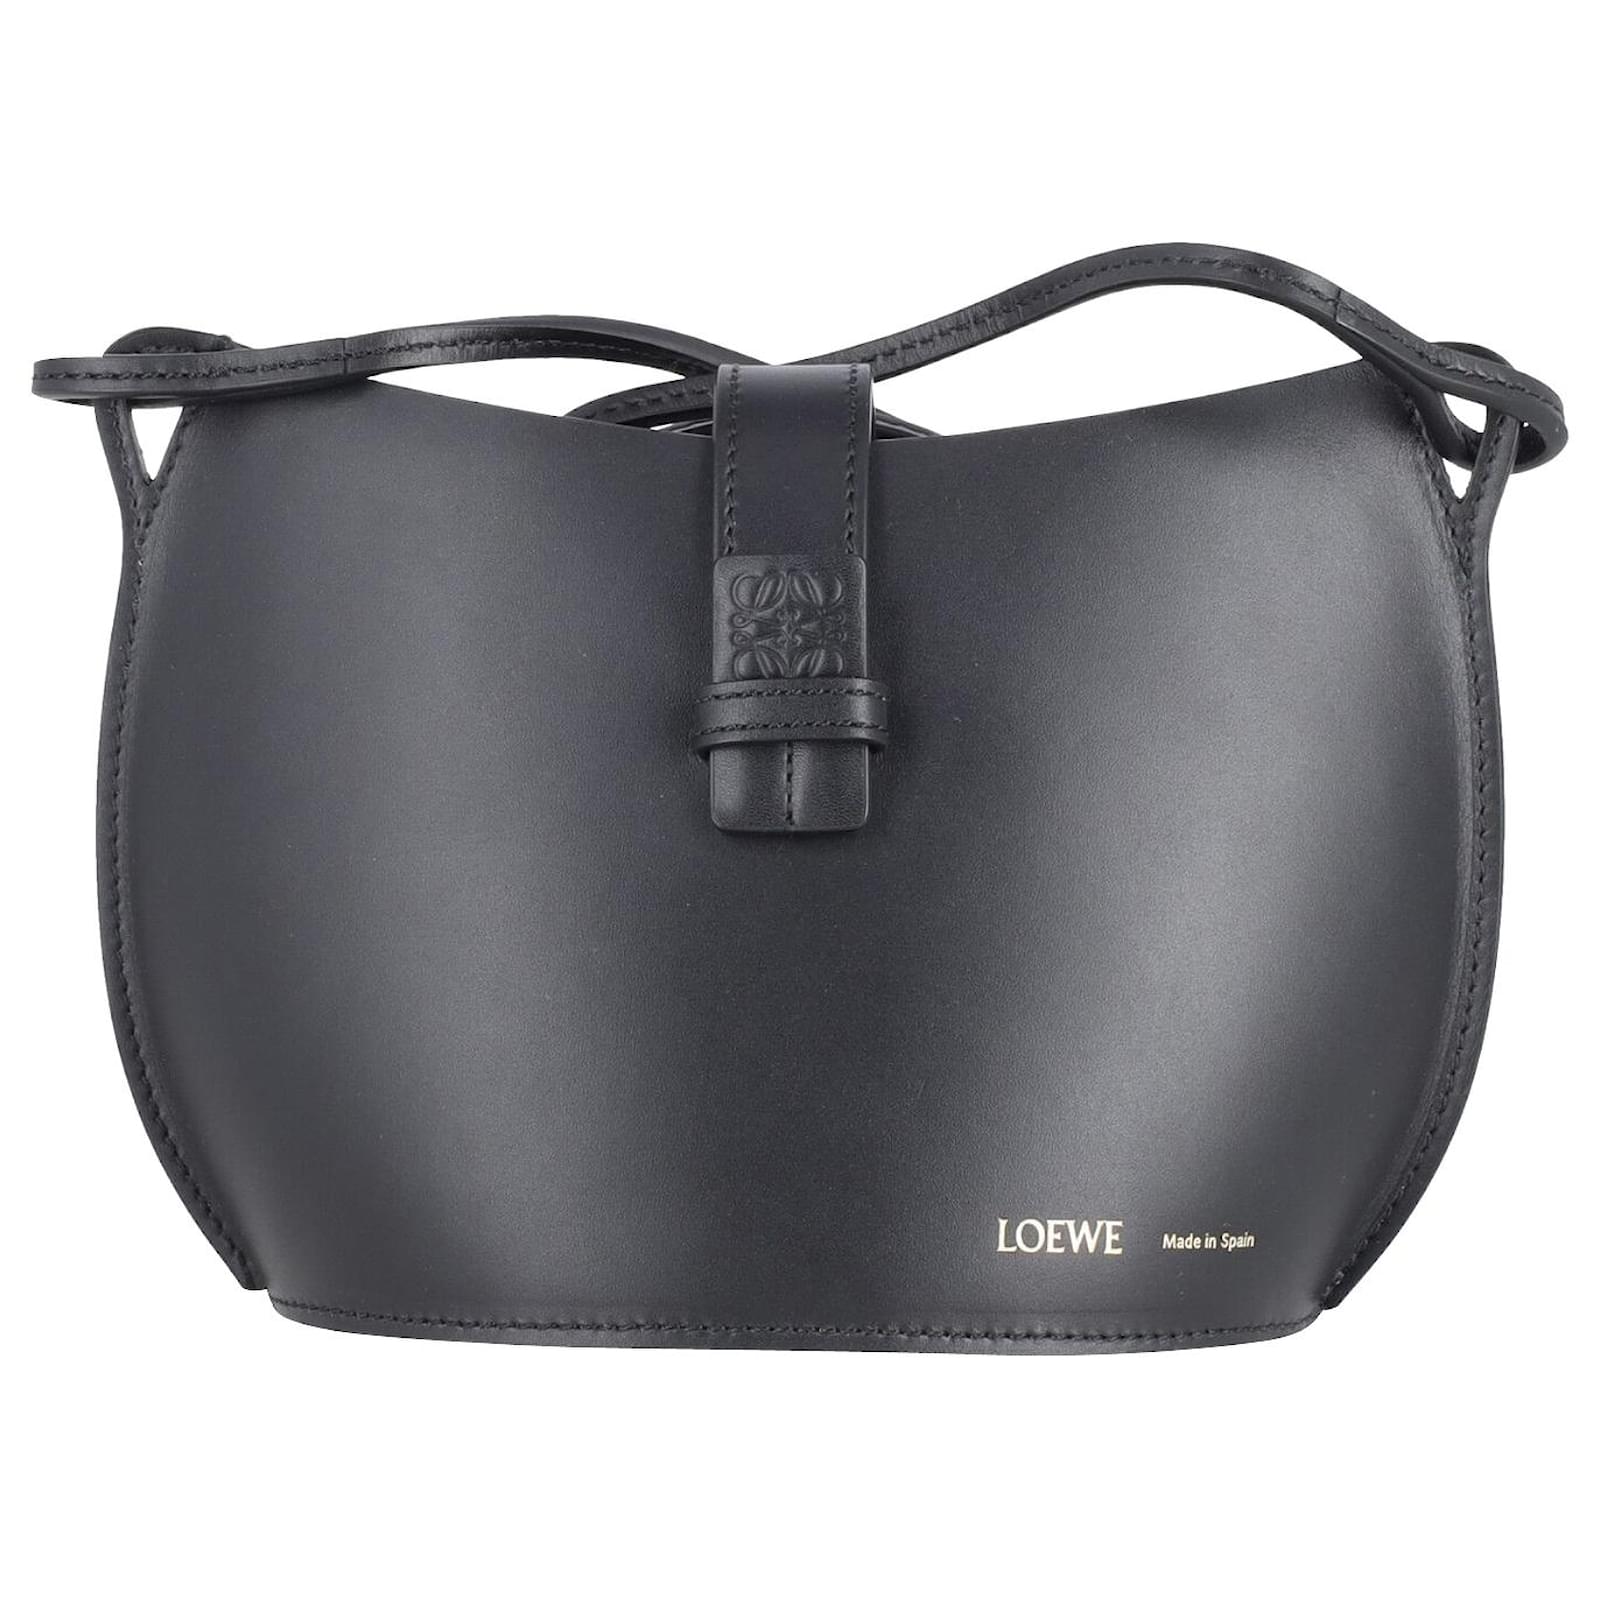 Loewe Moulded Bucket Bag in Black Calfskin Leather Pony-style calfskin ...